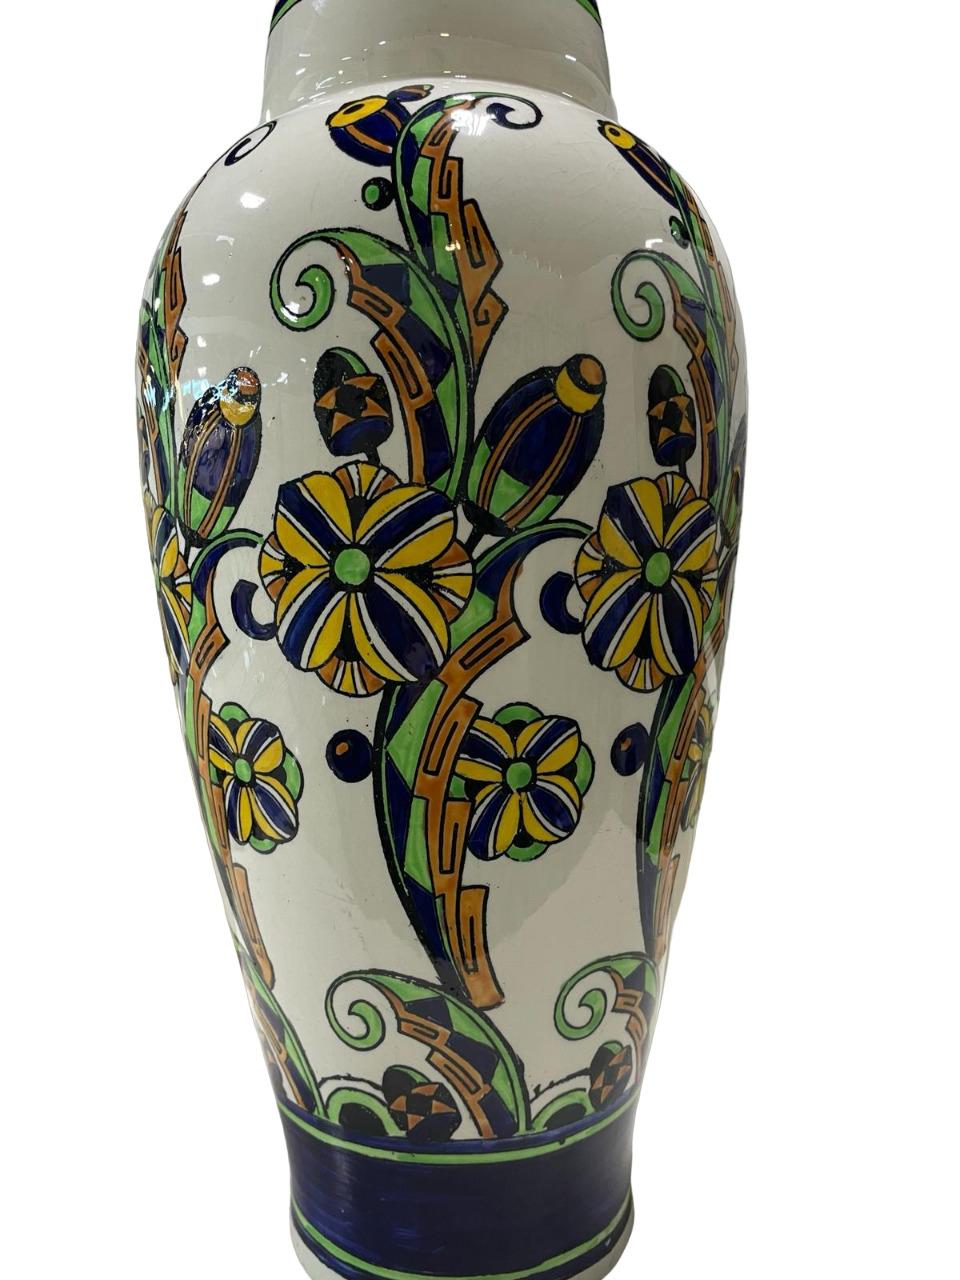 ART DECO LARGE Charles Catteau für Boch Keramis Vase um 1927 (Art déco) im Angebot